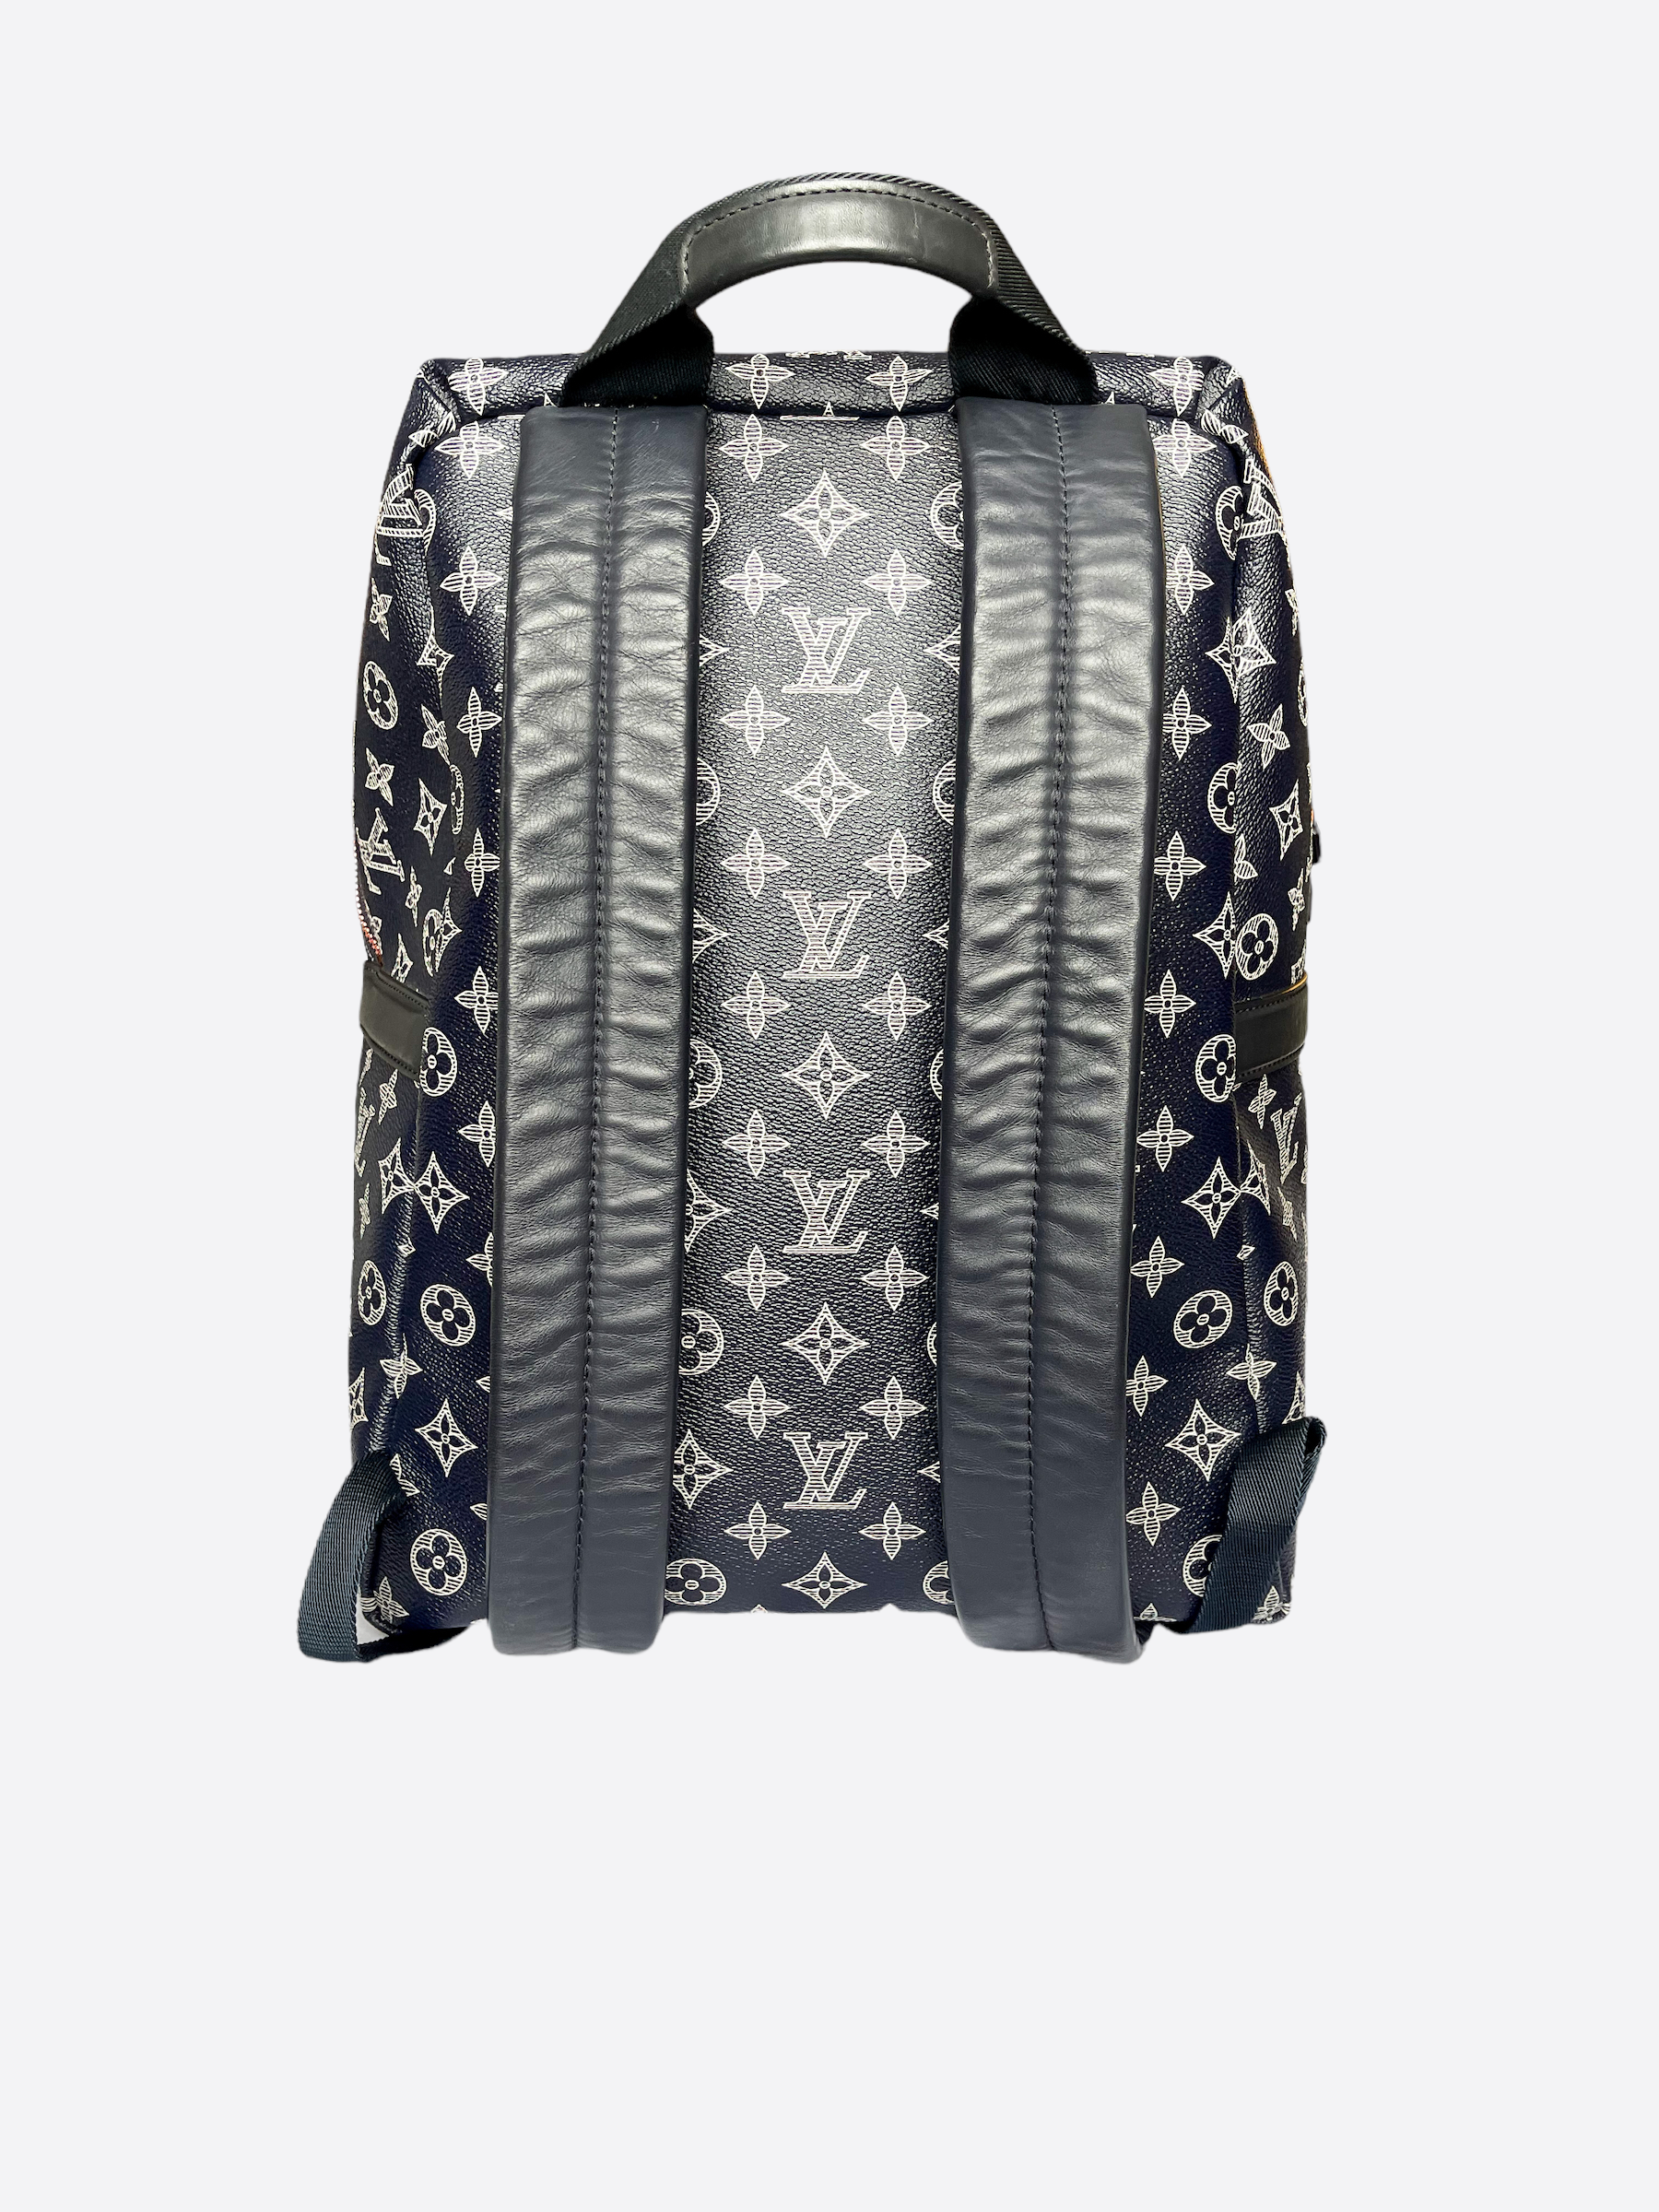 Louis Vuitton Keepall Kim Jones - Designer WishBags